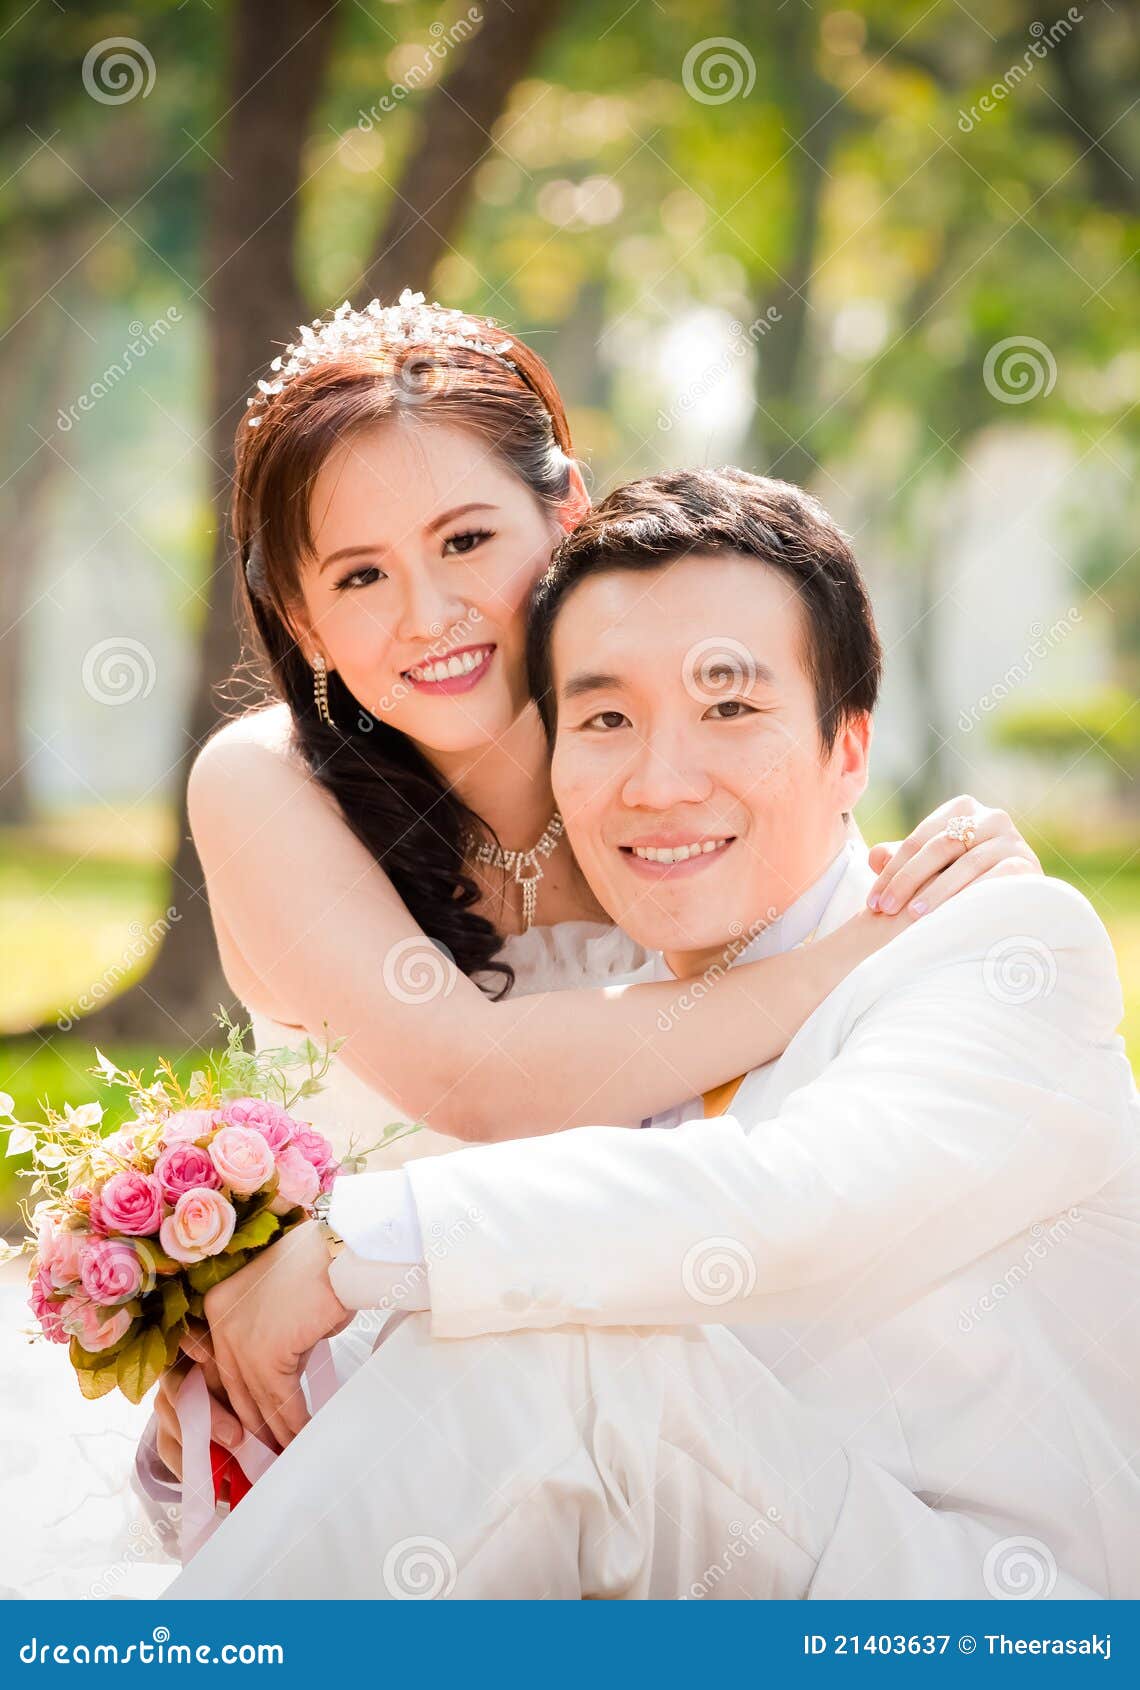 https://thumbs.dreamstime.com/z/asian-couple-21403637.jpg